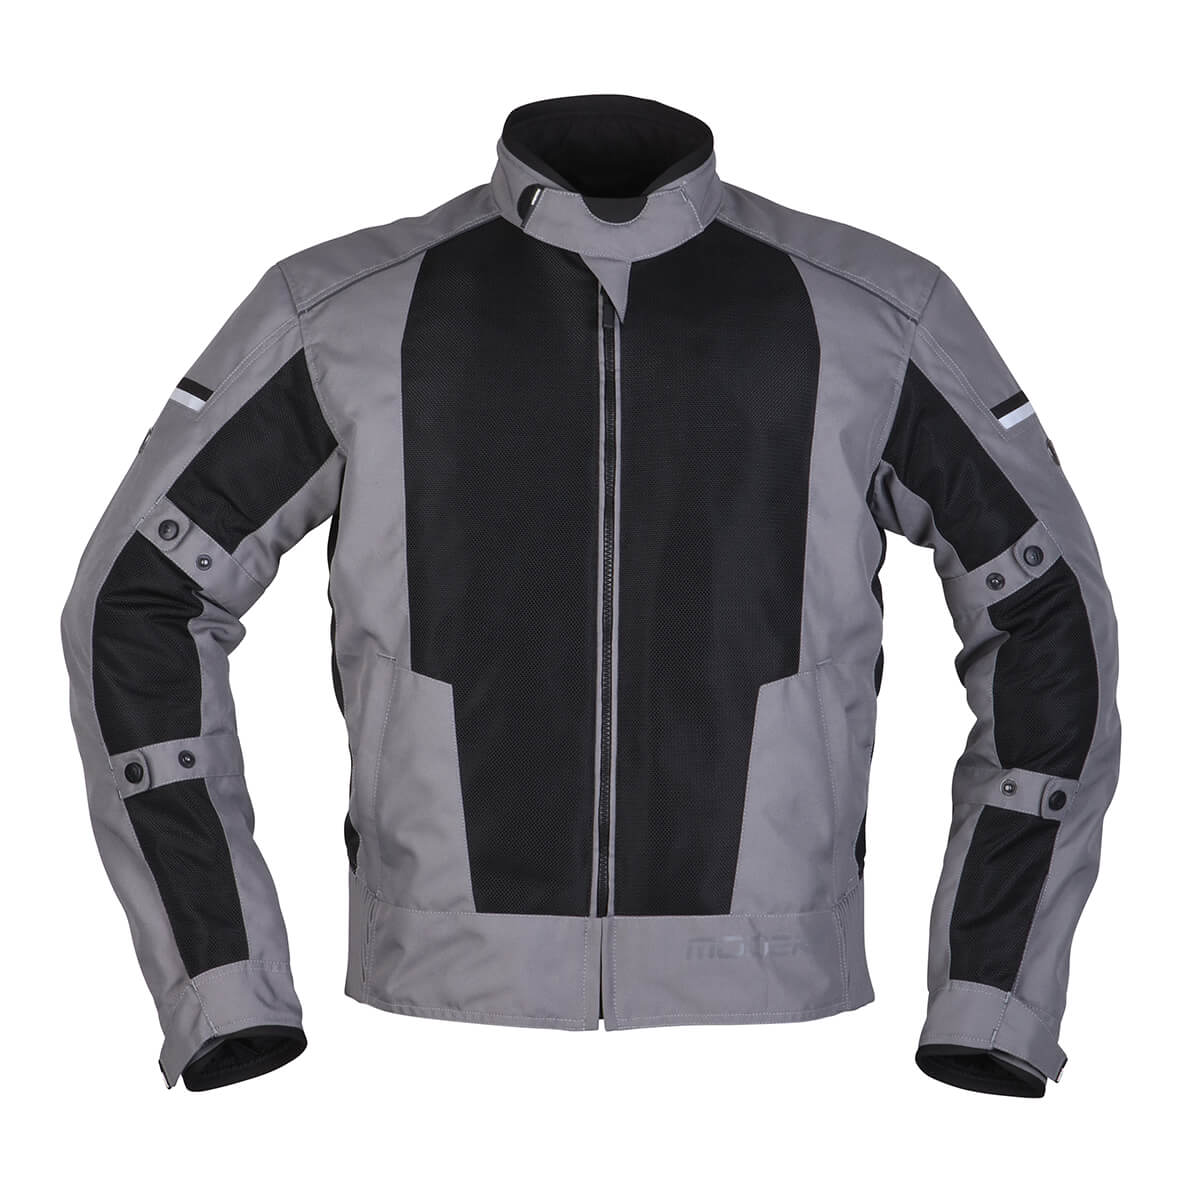 Image of Modeka Veo Air Jacket Black Gray Size 4XL ID 4045765189894